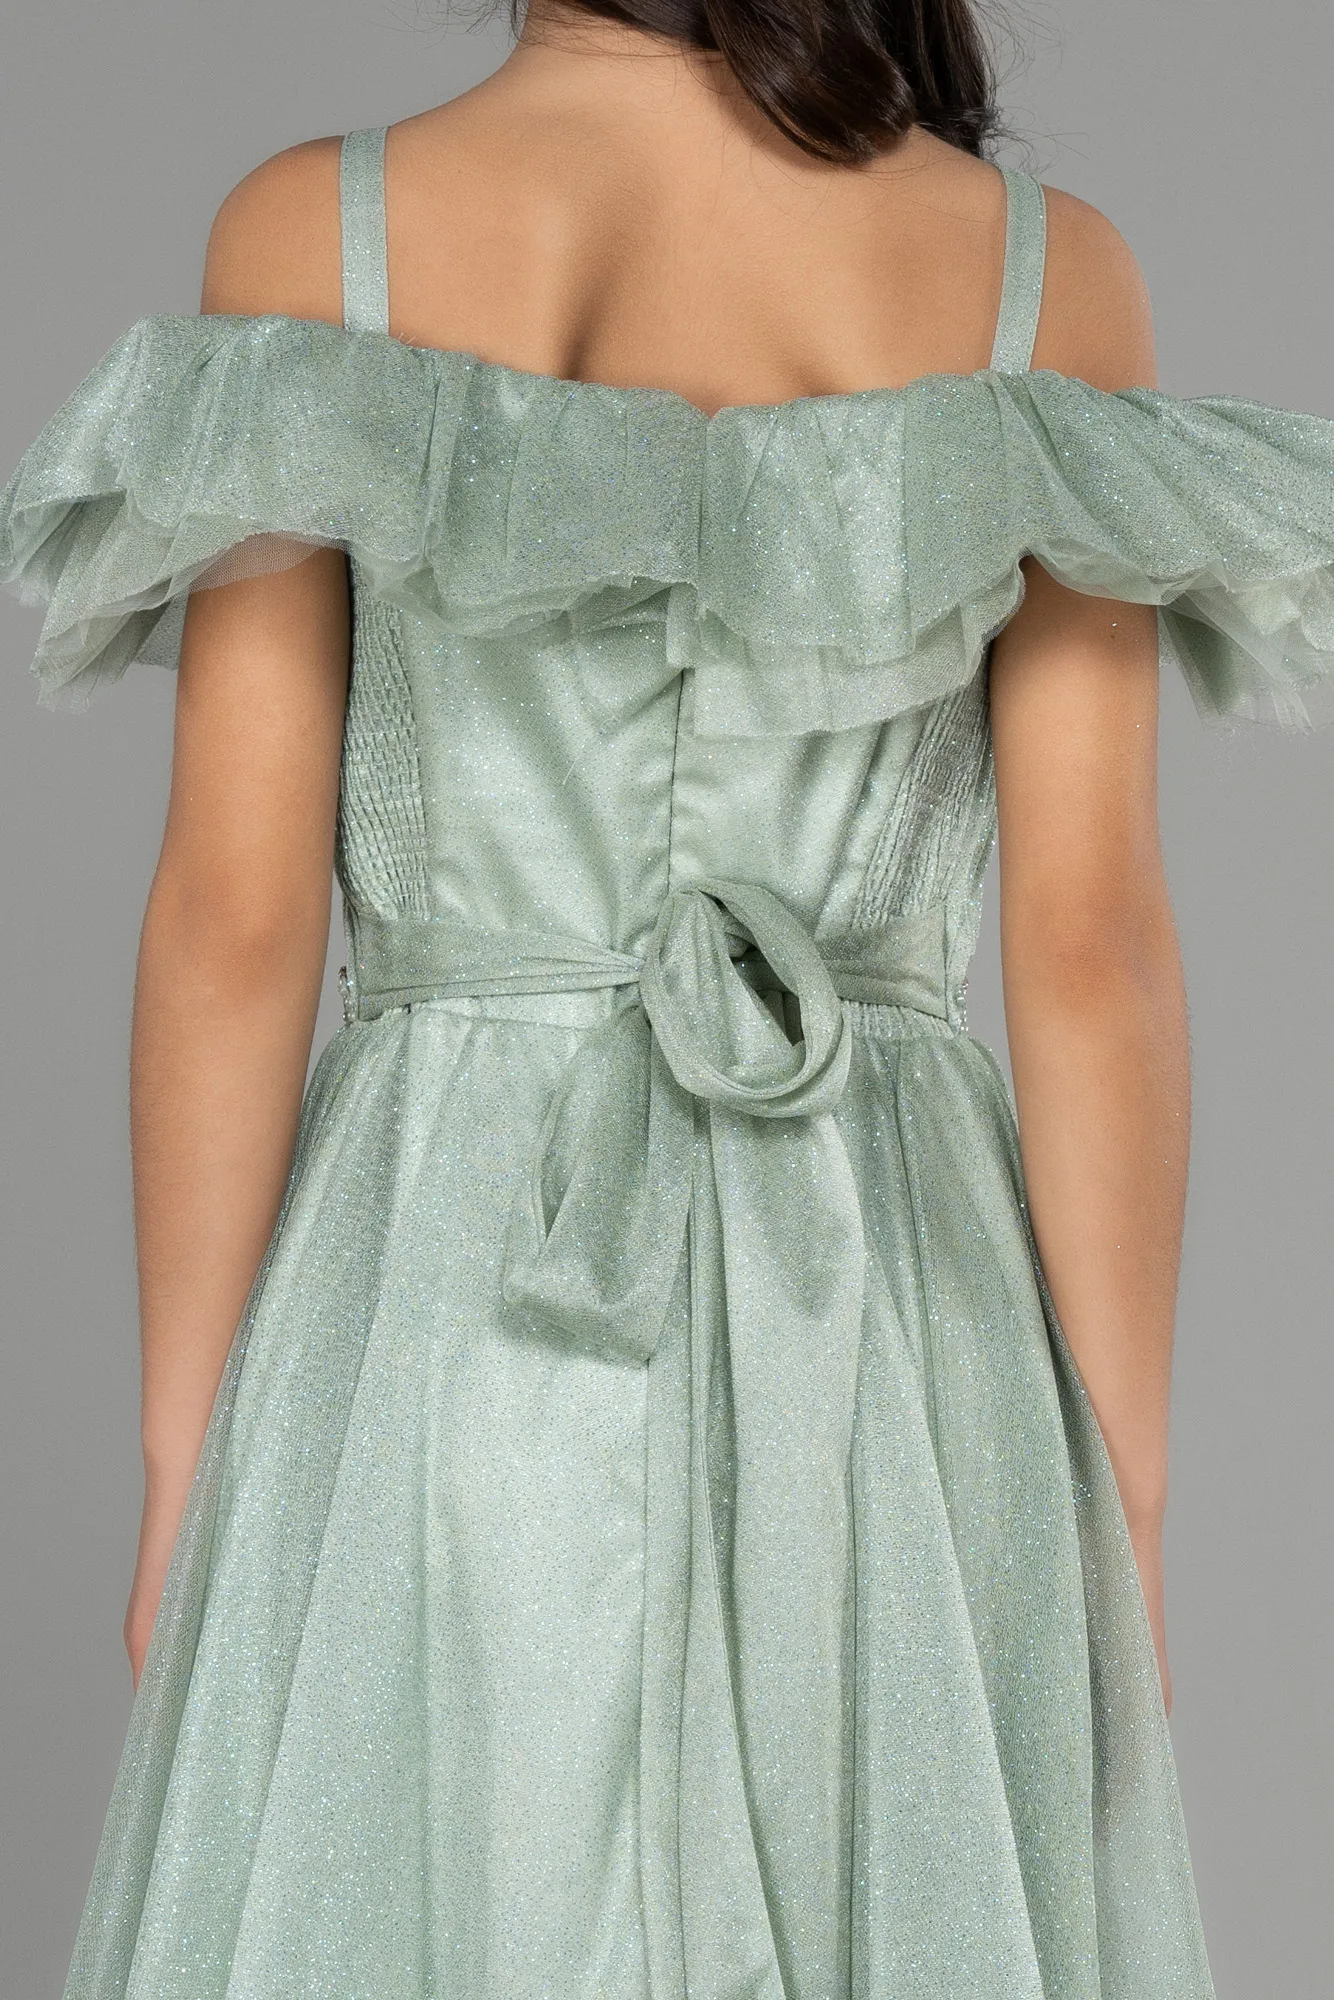 Turquoise-Long Girl Dress ABU3728